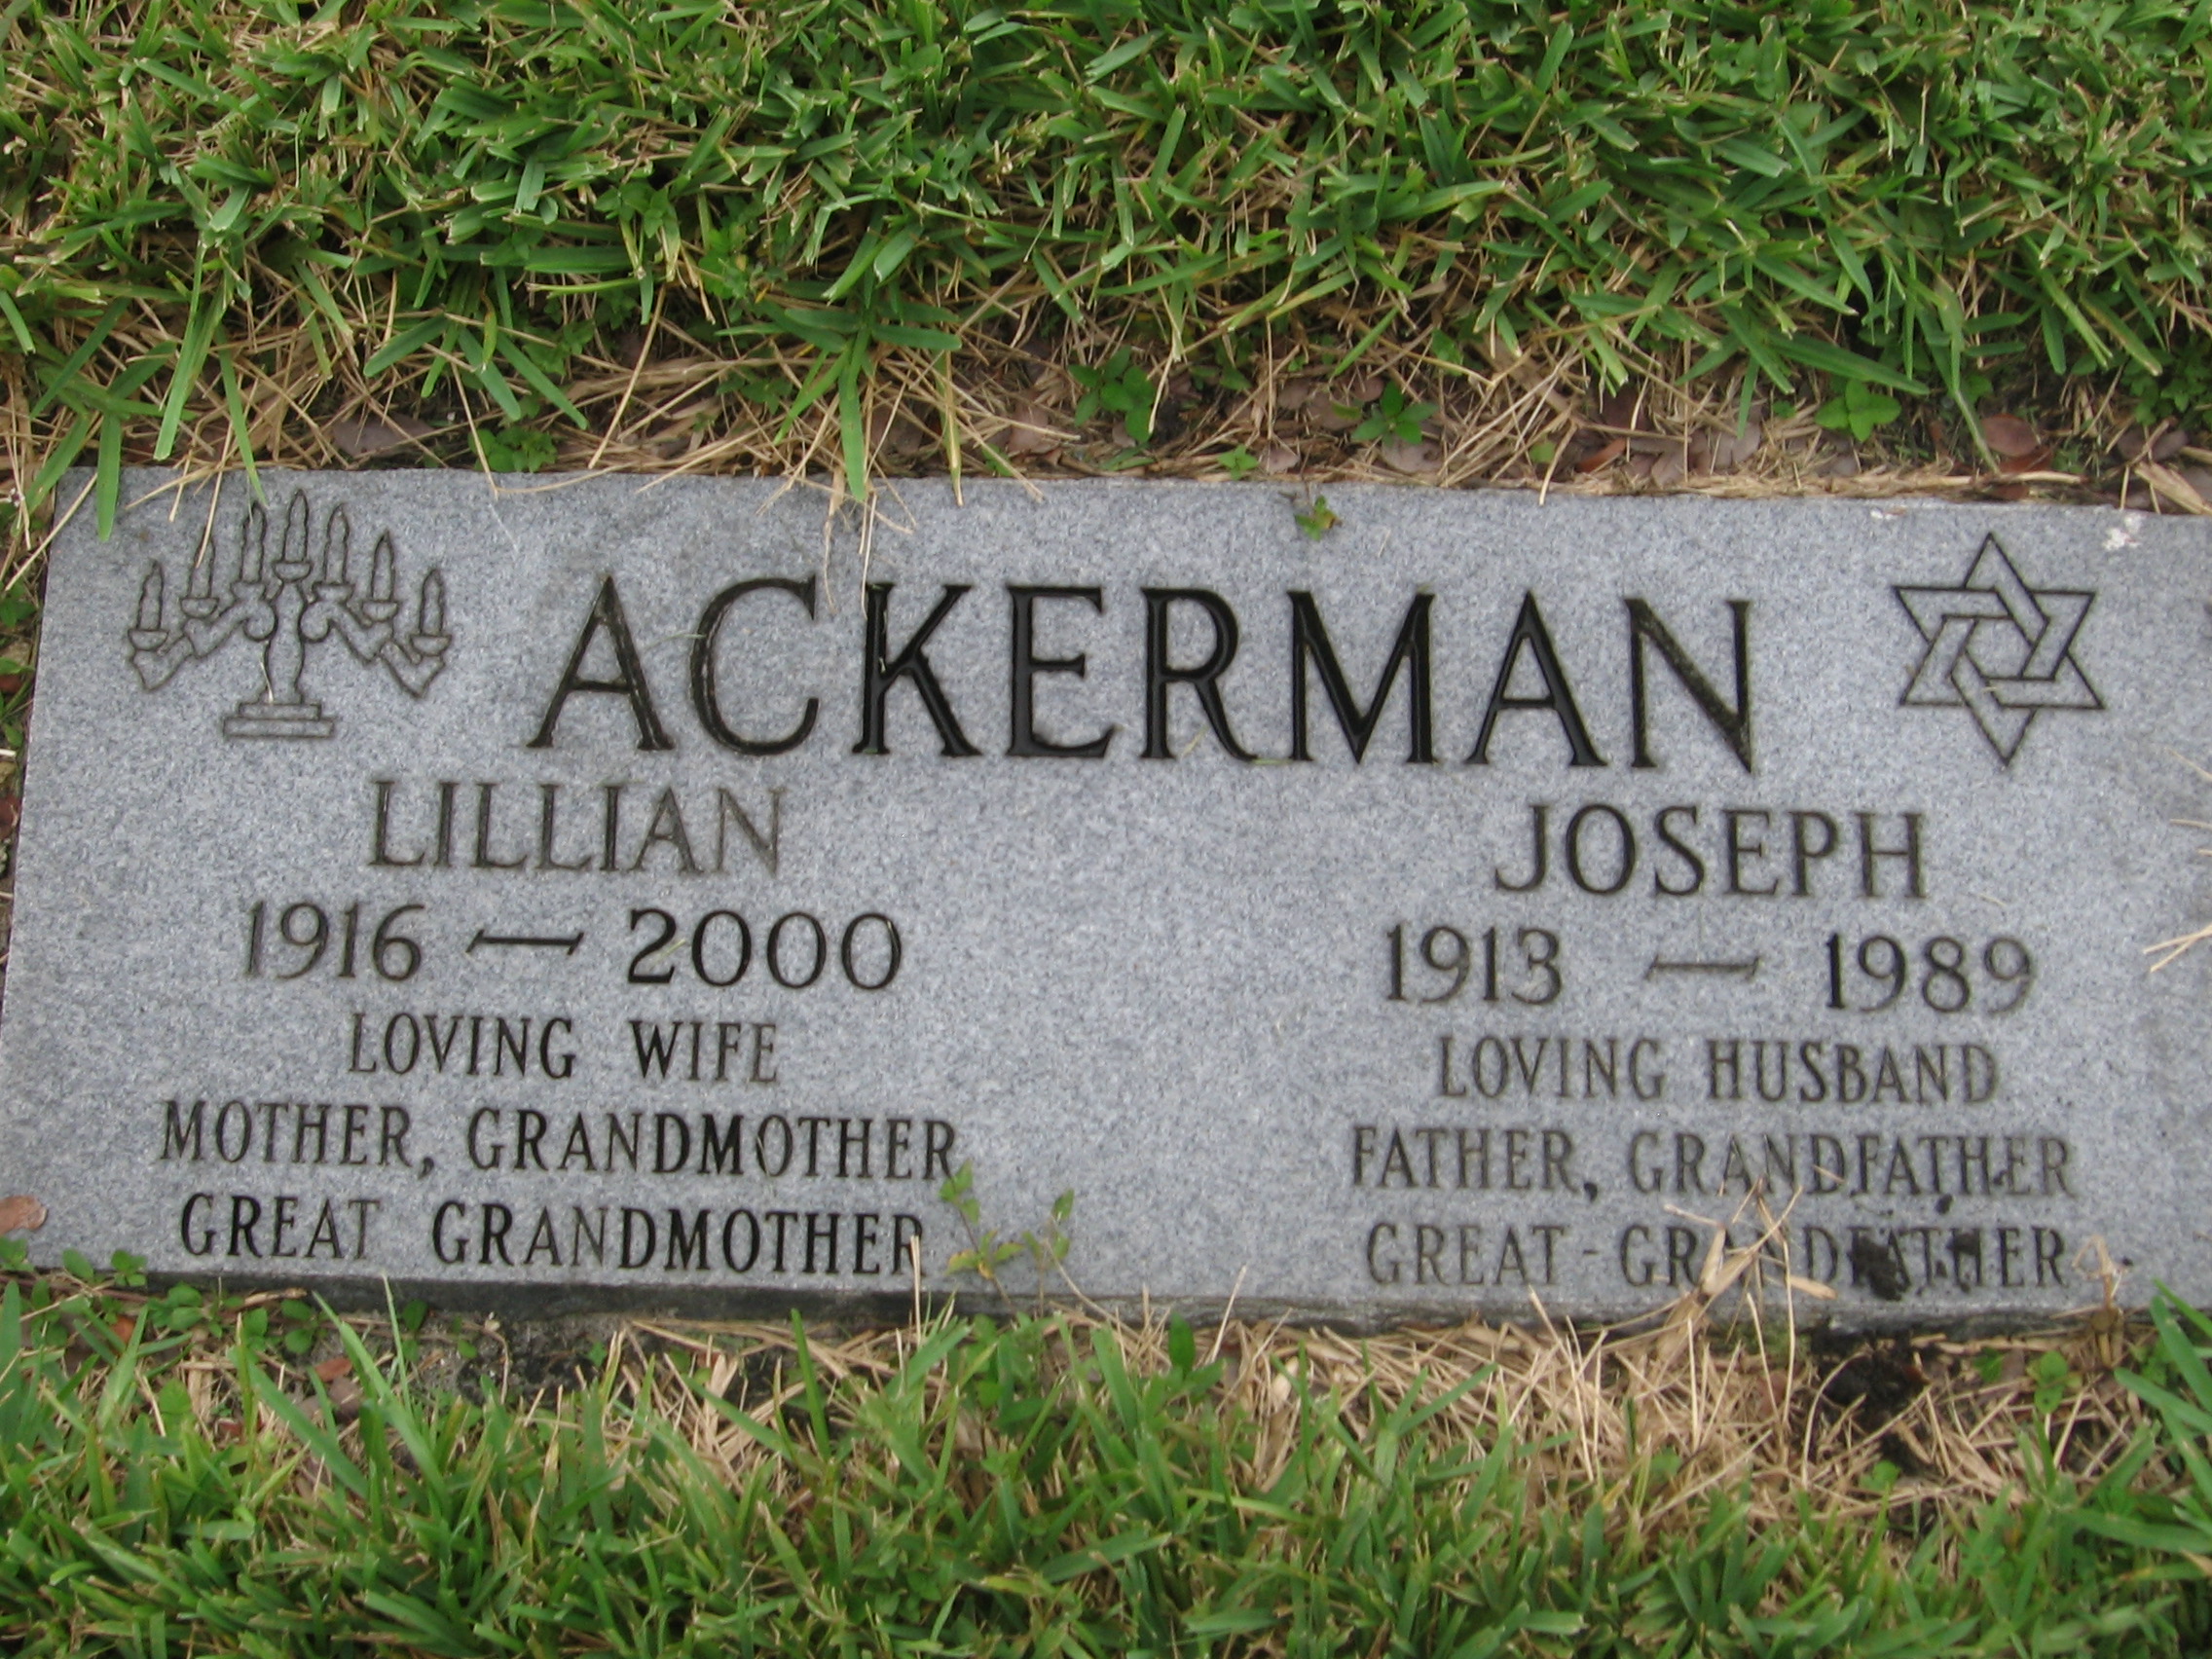 Joseph Ackerman